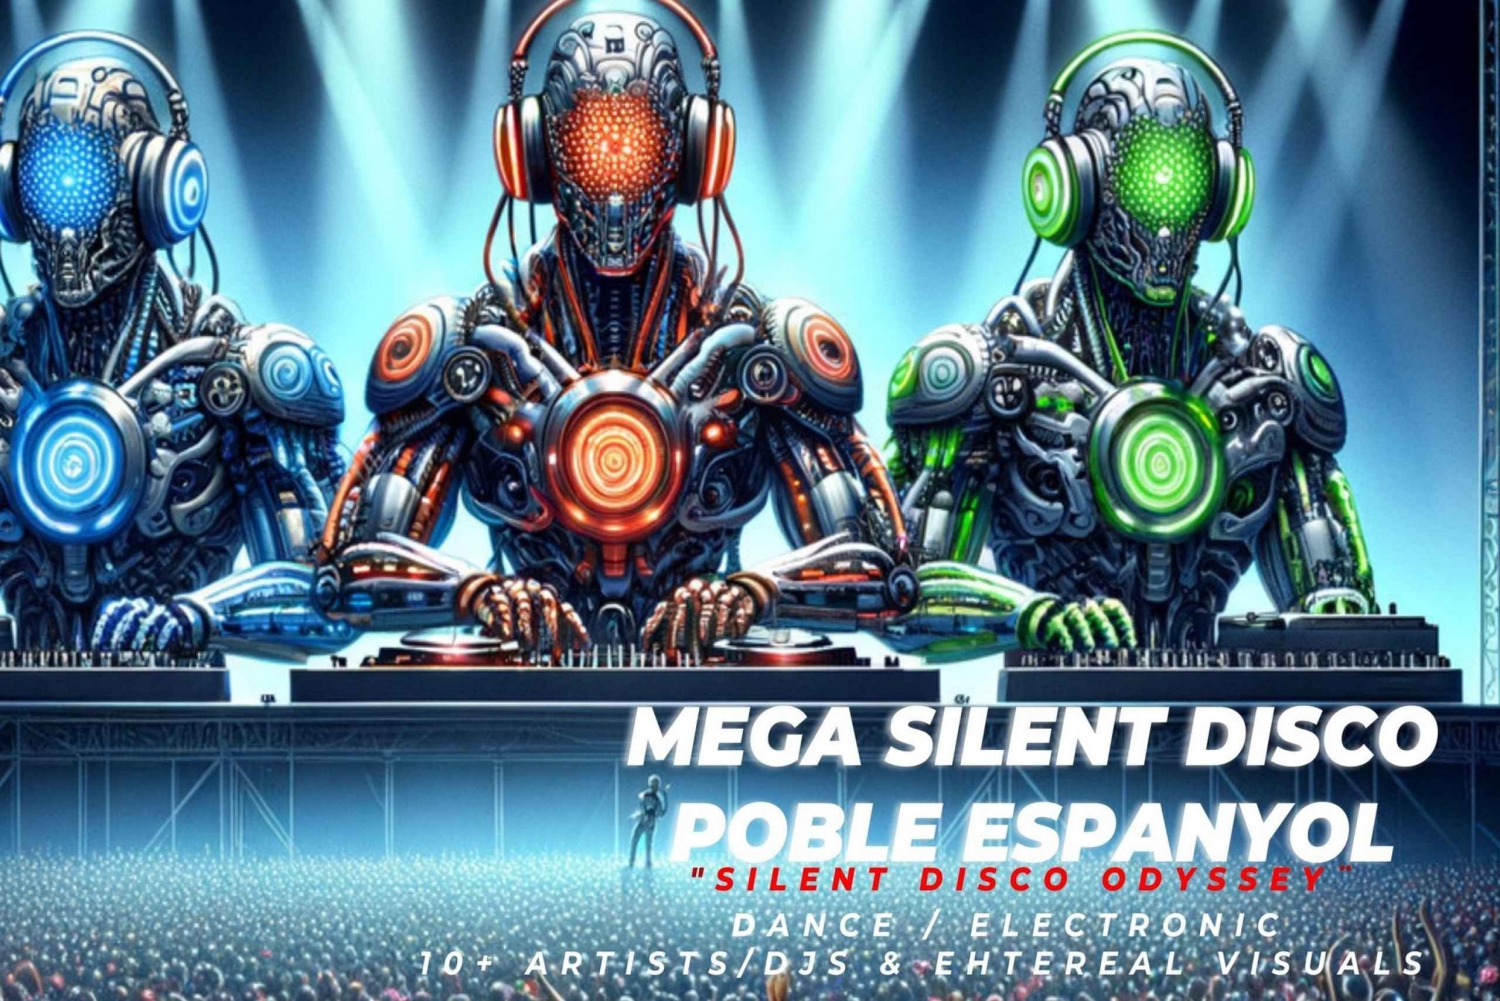 Poble espanyol: Mega Silent Disco Event Visuals & Music